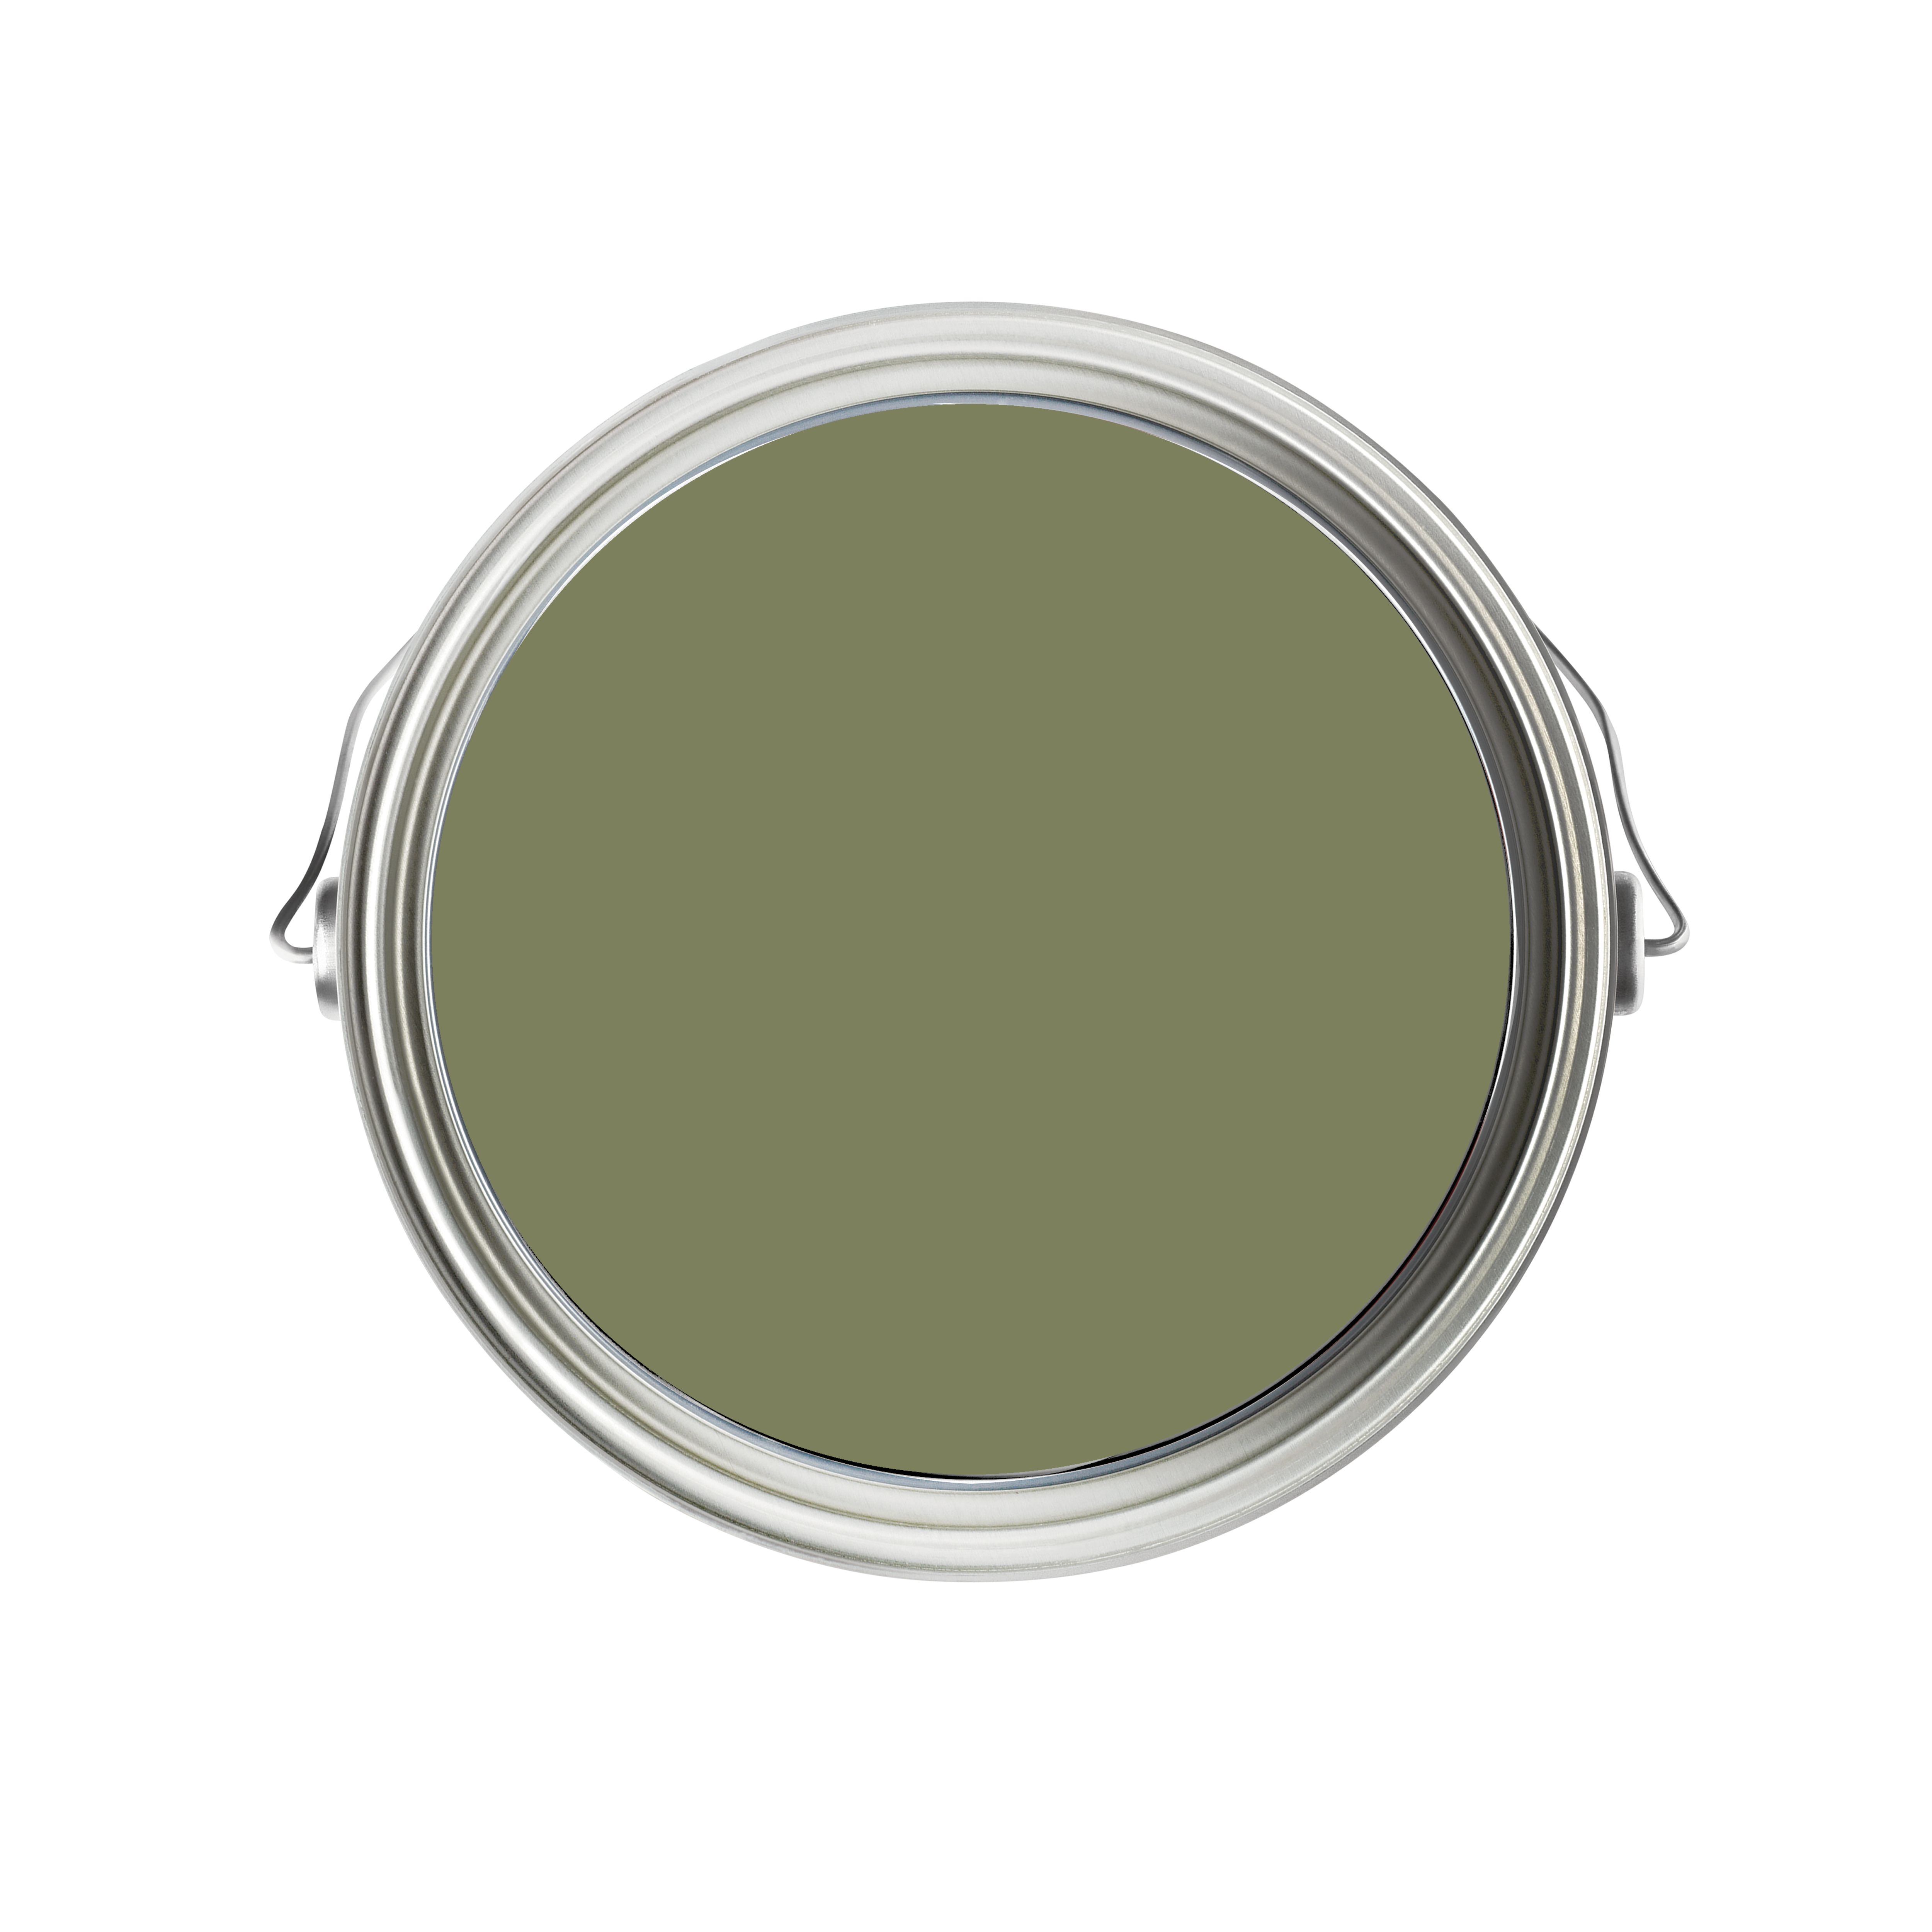 Fleetwood Mystery Green Vinyl matt Emulsion paint, 75ml Tester pot